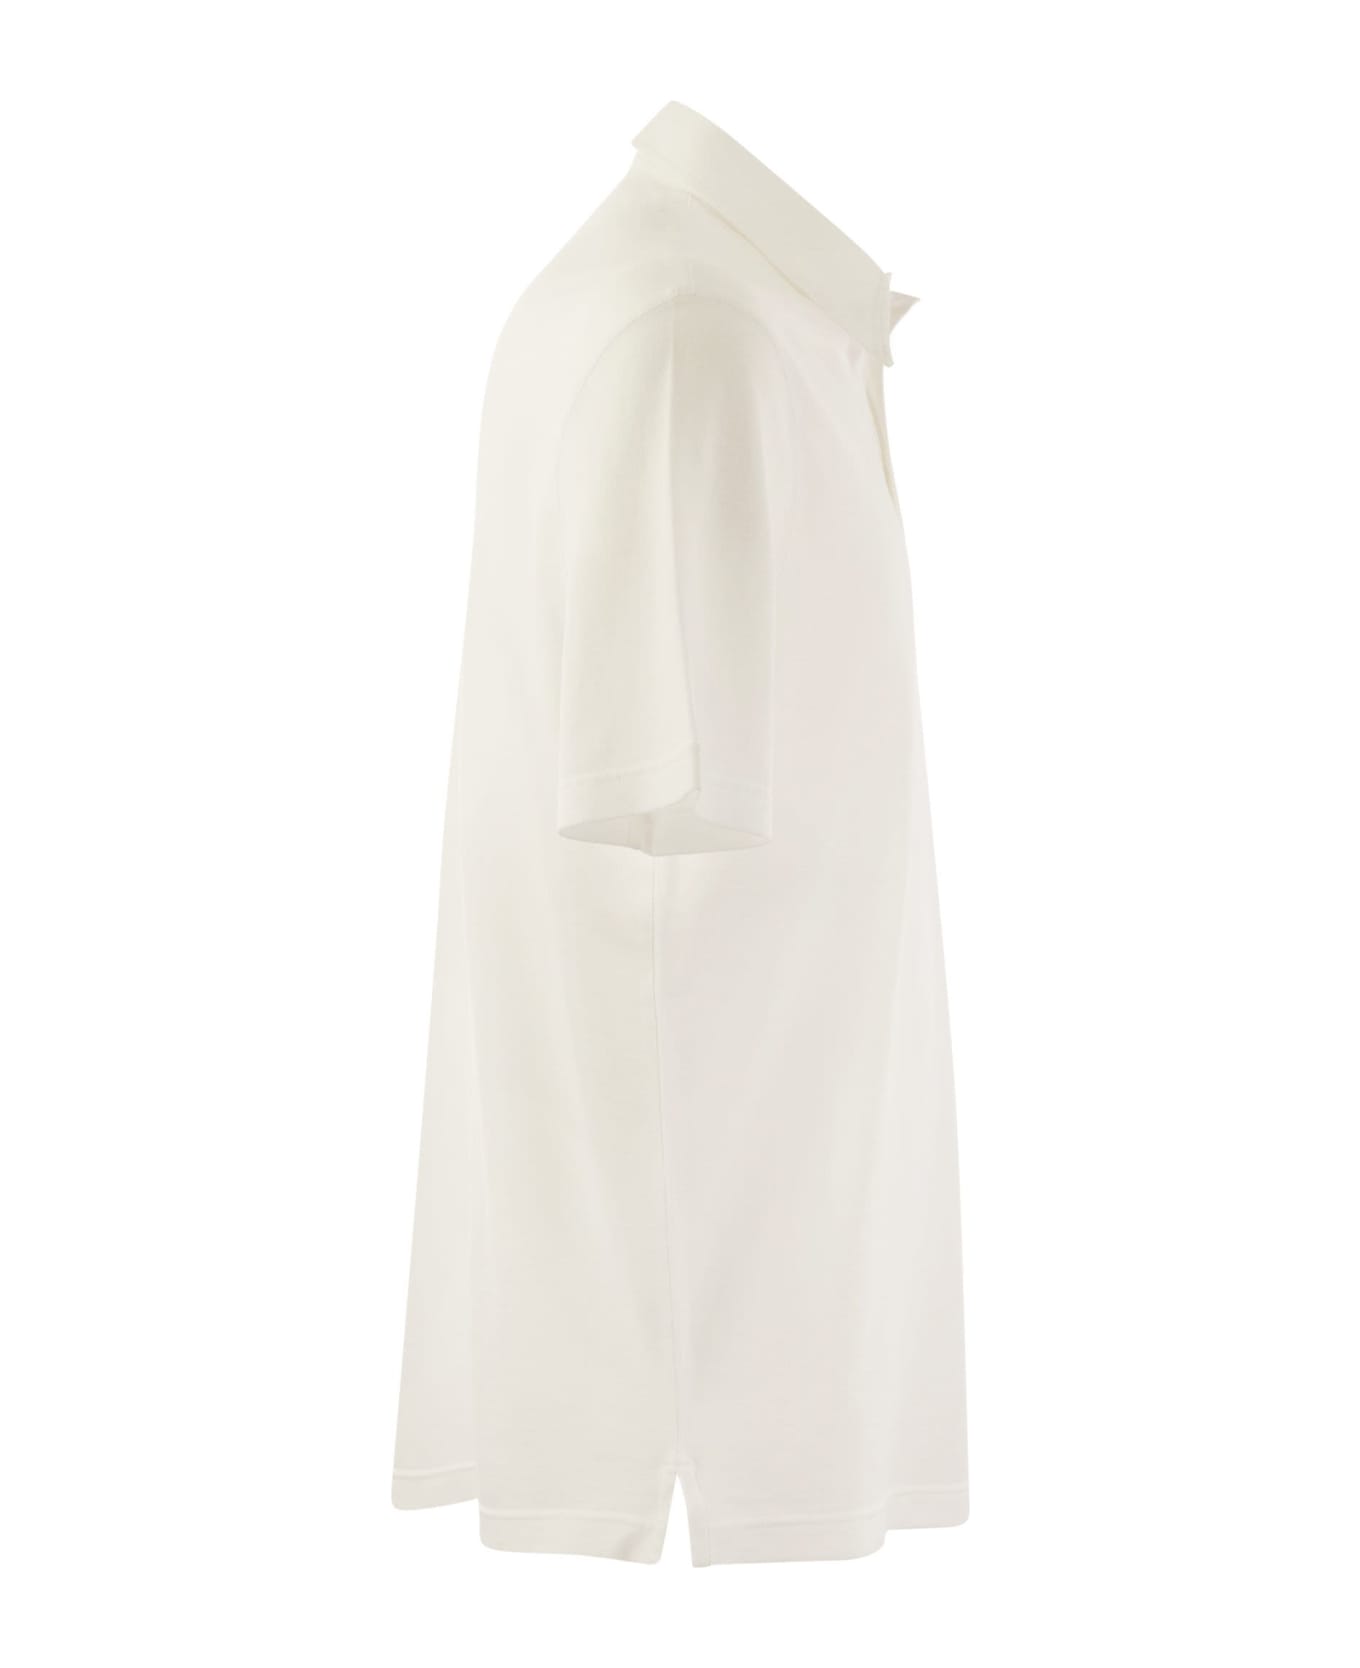 Fedeli Short-sleeved Cotton Polo Shirt - White